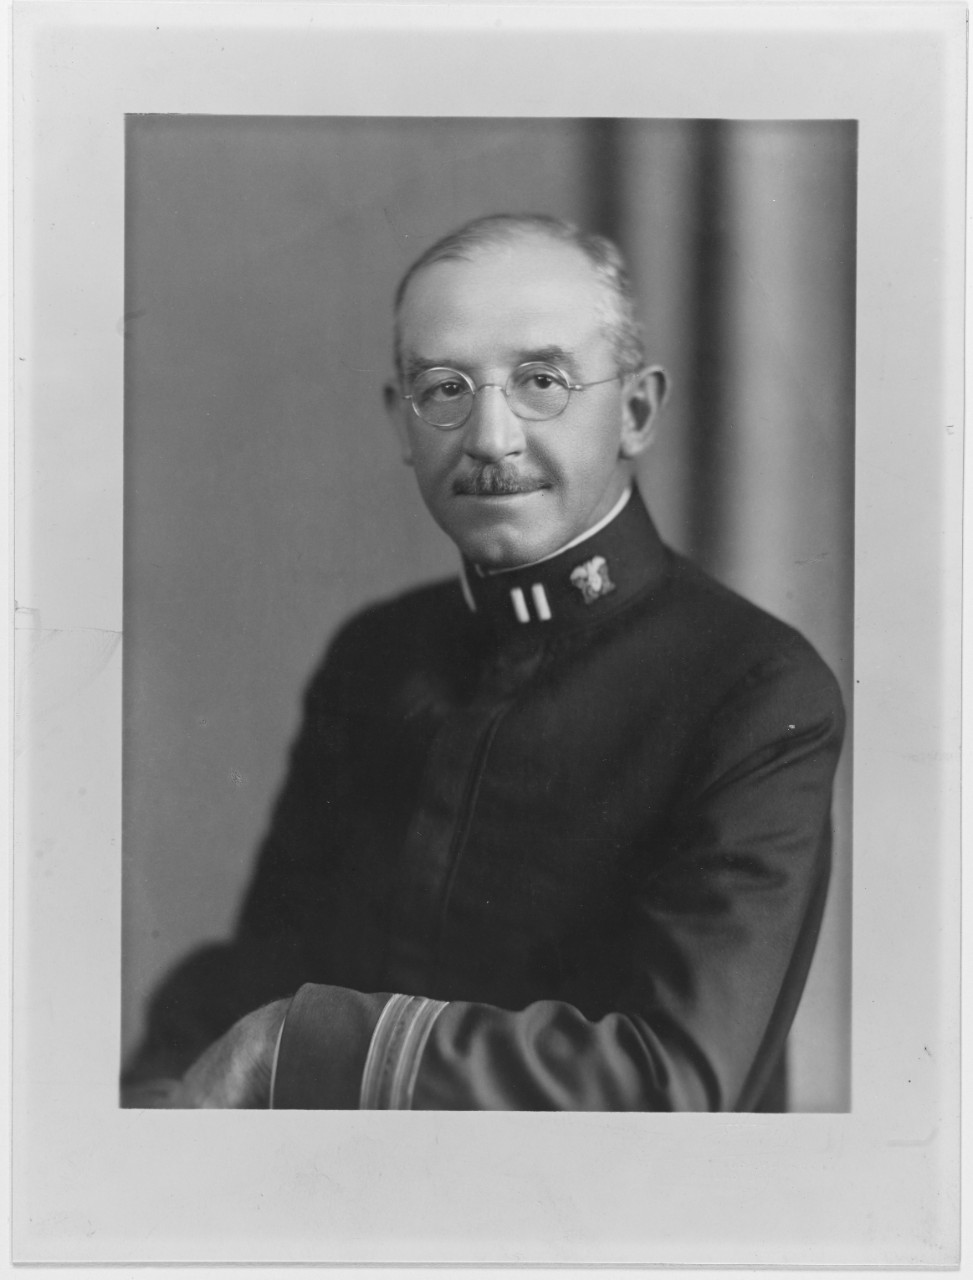 Lieutenant George G. Ross, USN Reserve Force (Medical Corps)